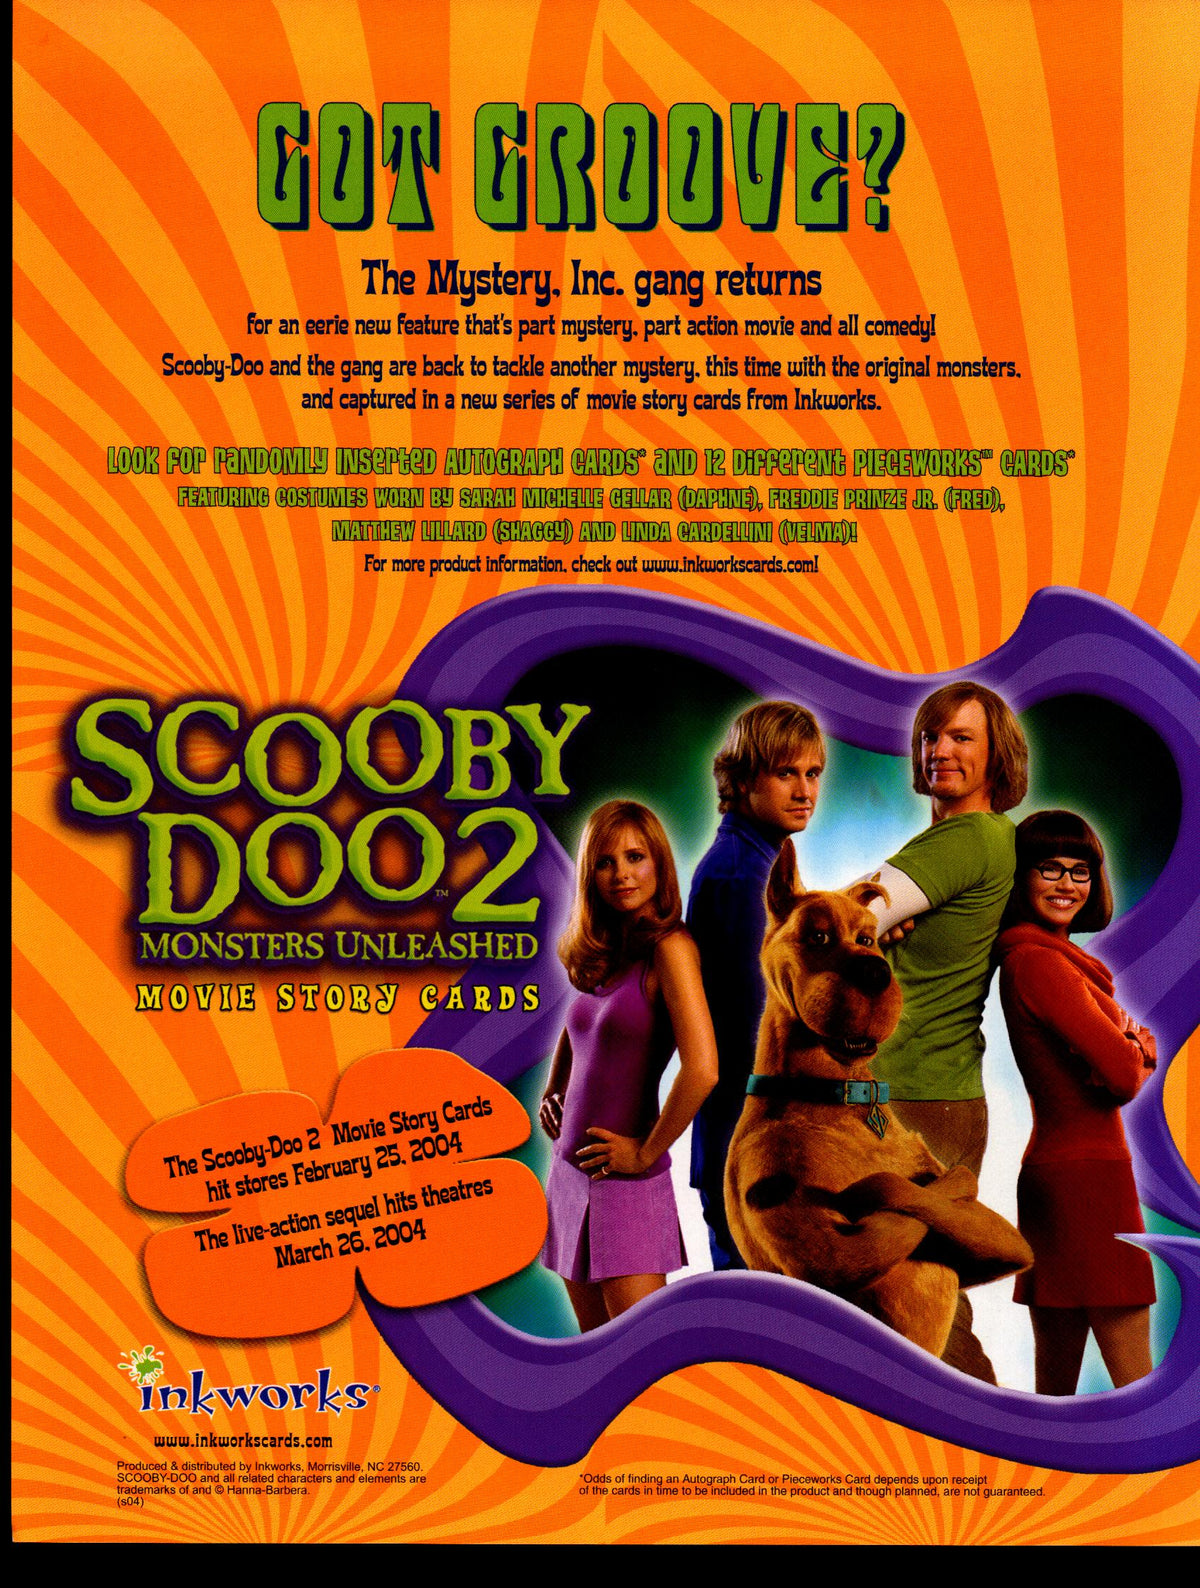 scooby doo 2 poster